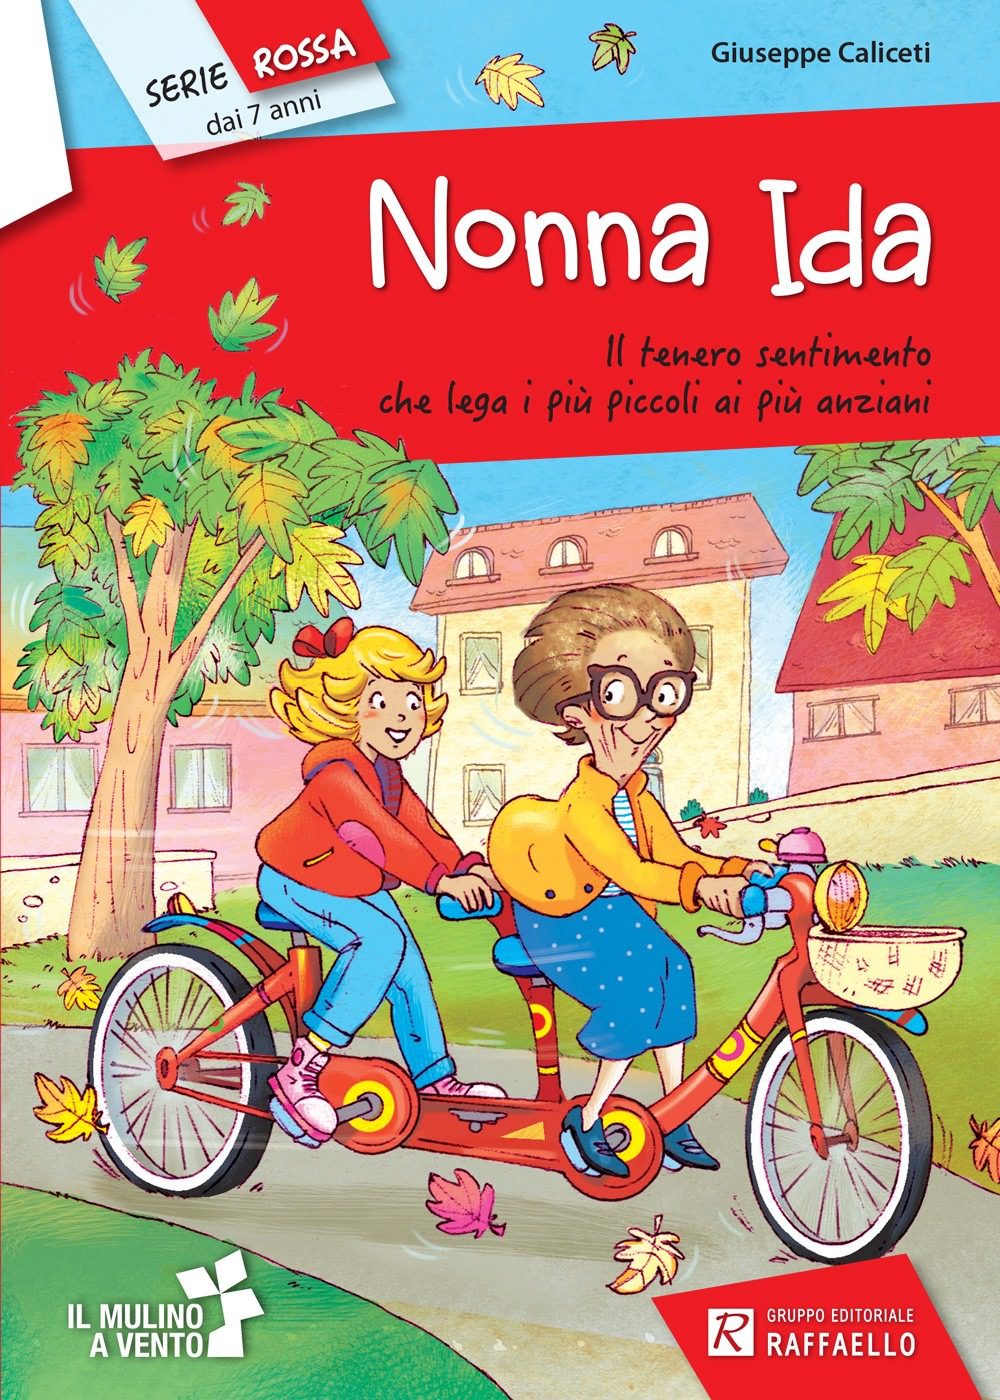 Nonna Ida - Raffaello Bookshop